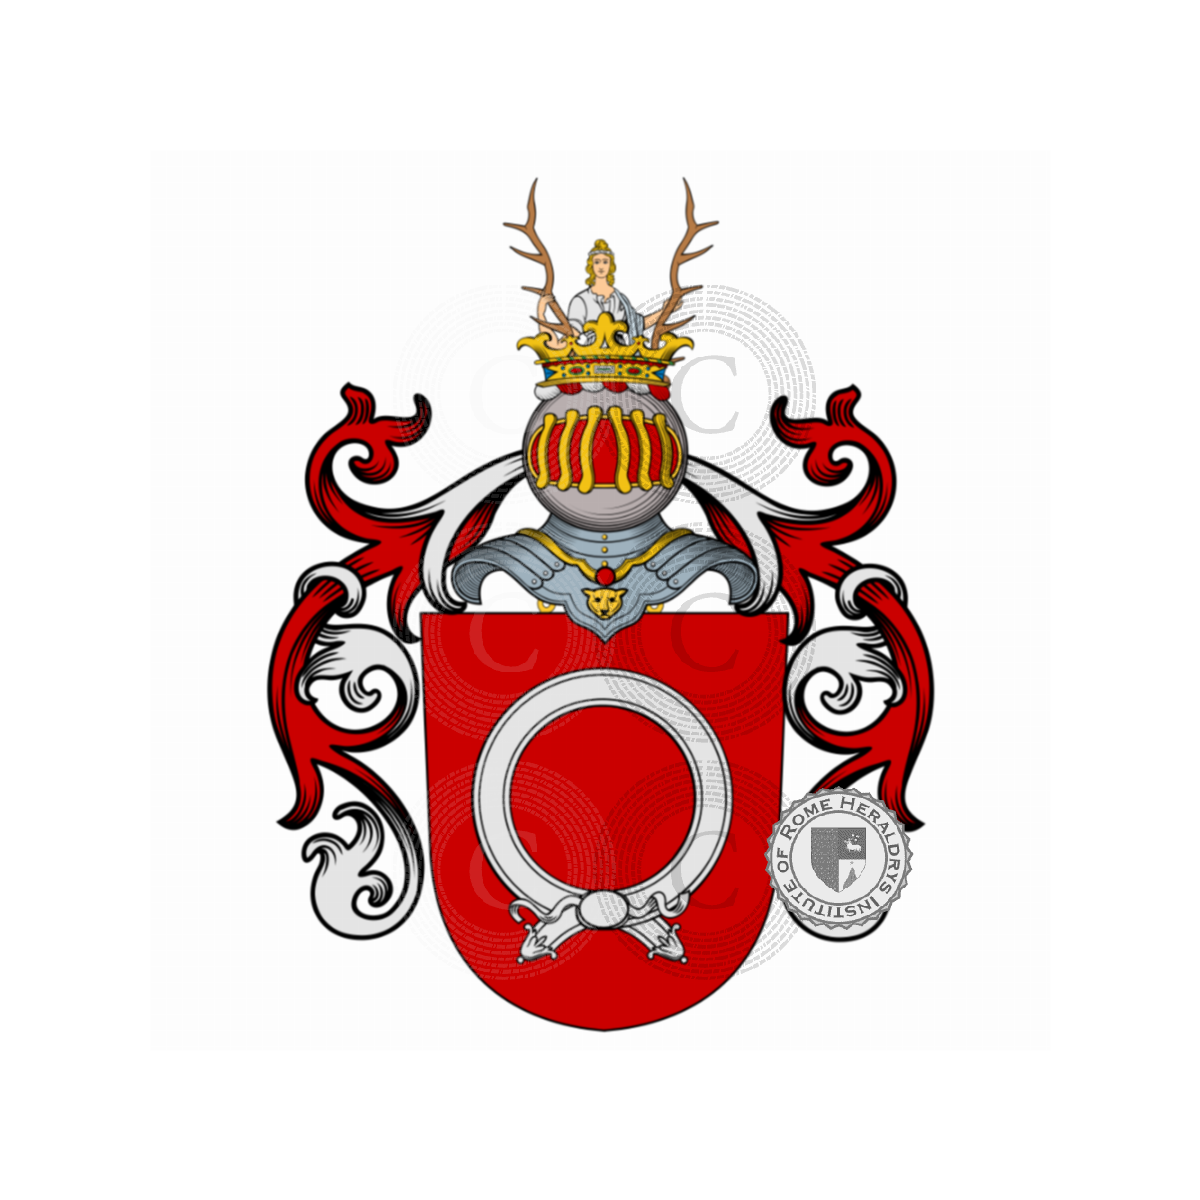 Wappen der FamilieBoccella, Boccella Ducloz